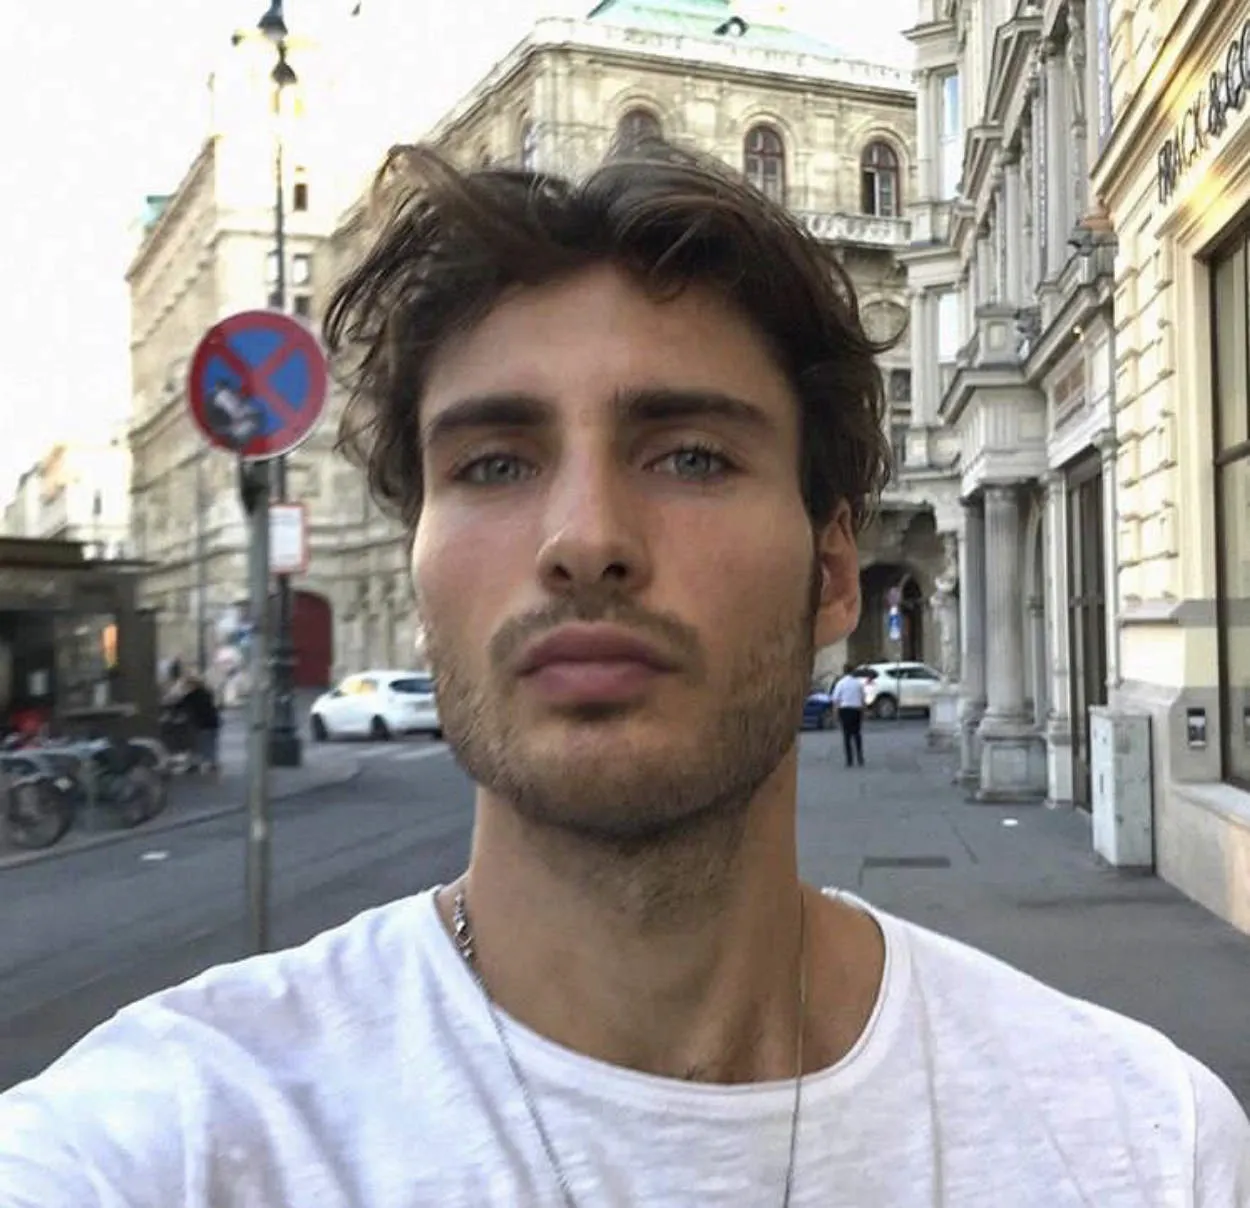 Austria handsome boy or actor